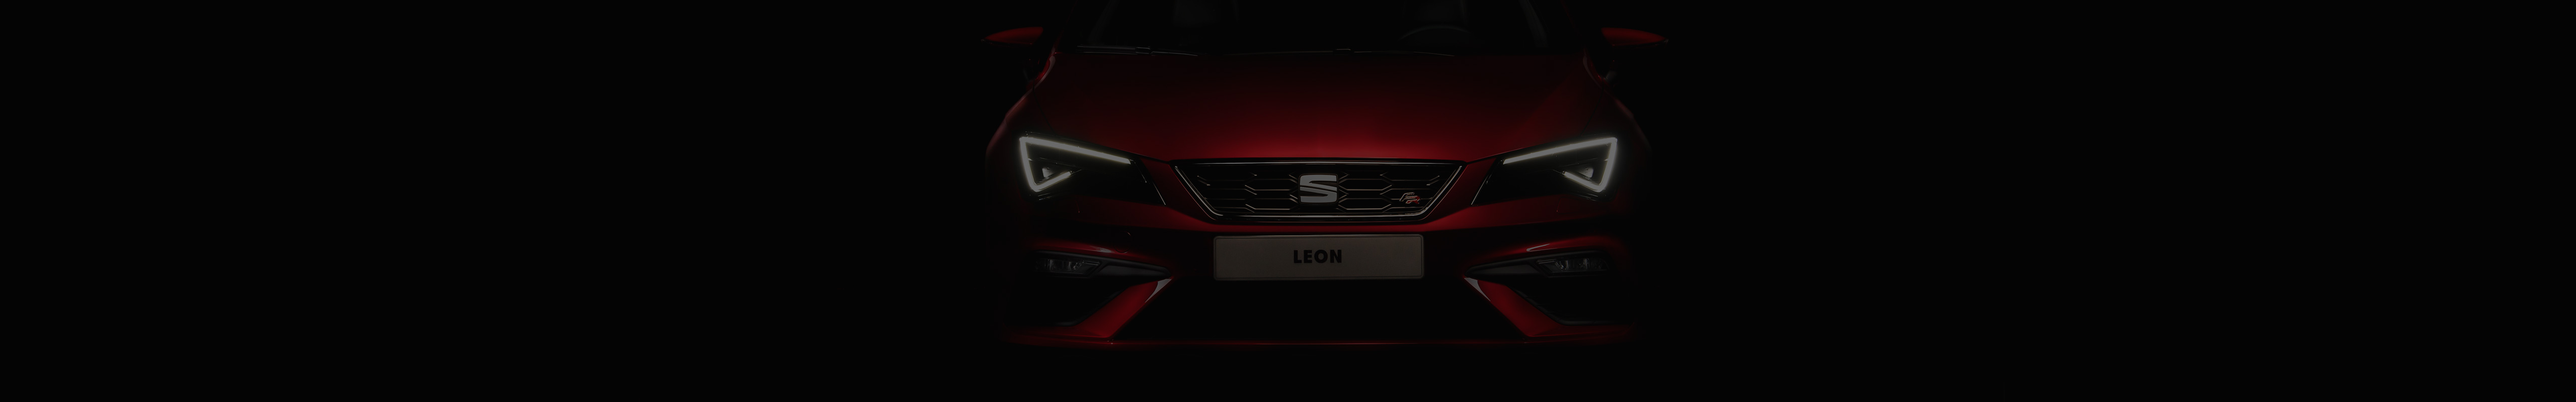 SEAT Leon: one million times the chosen one